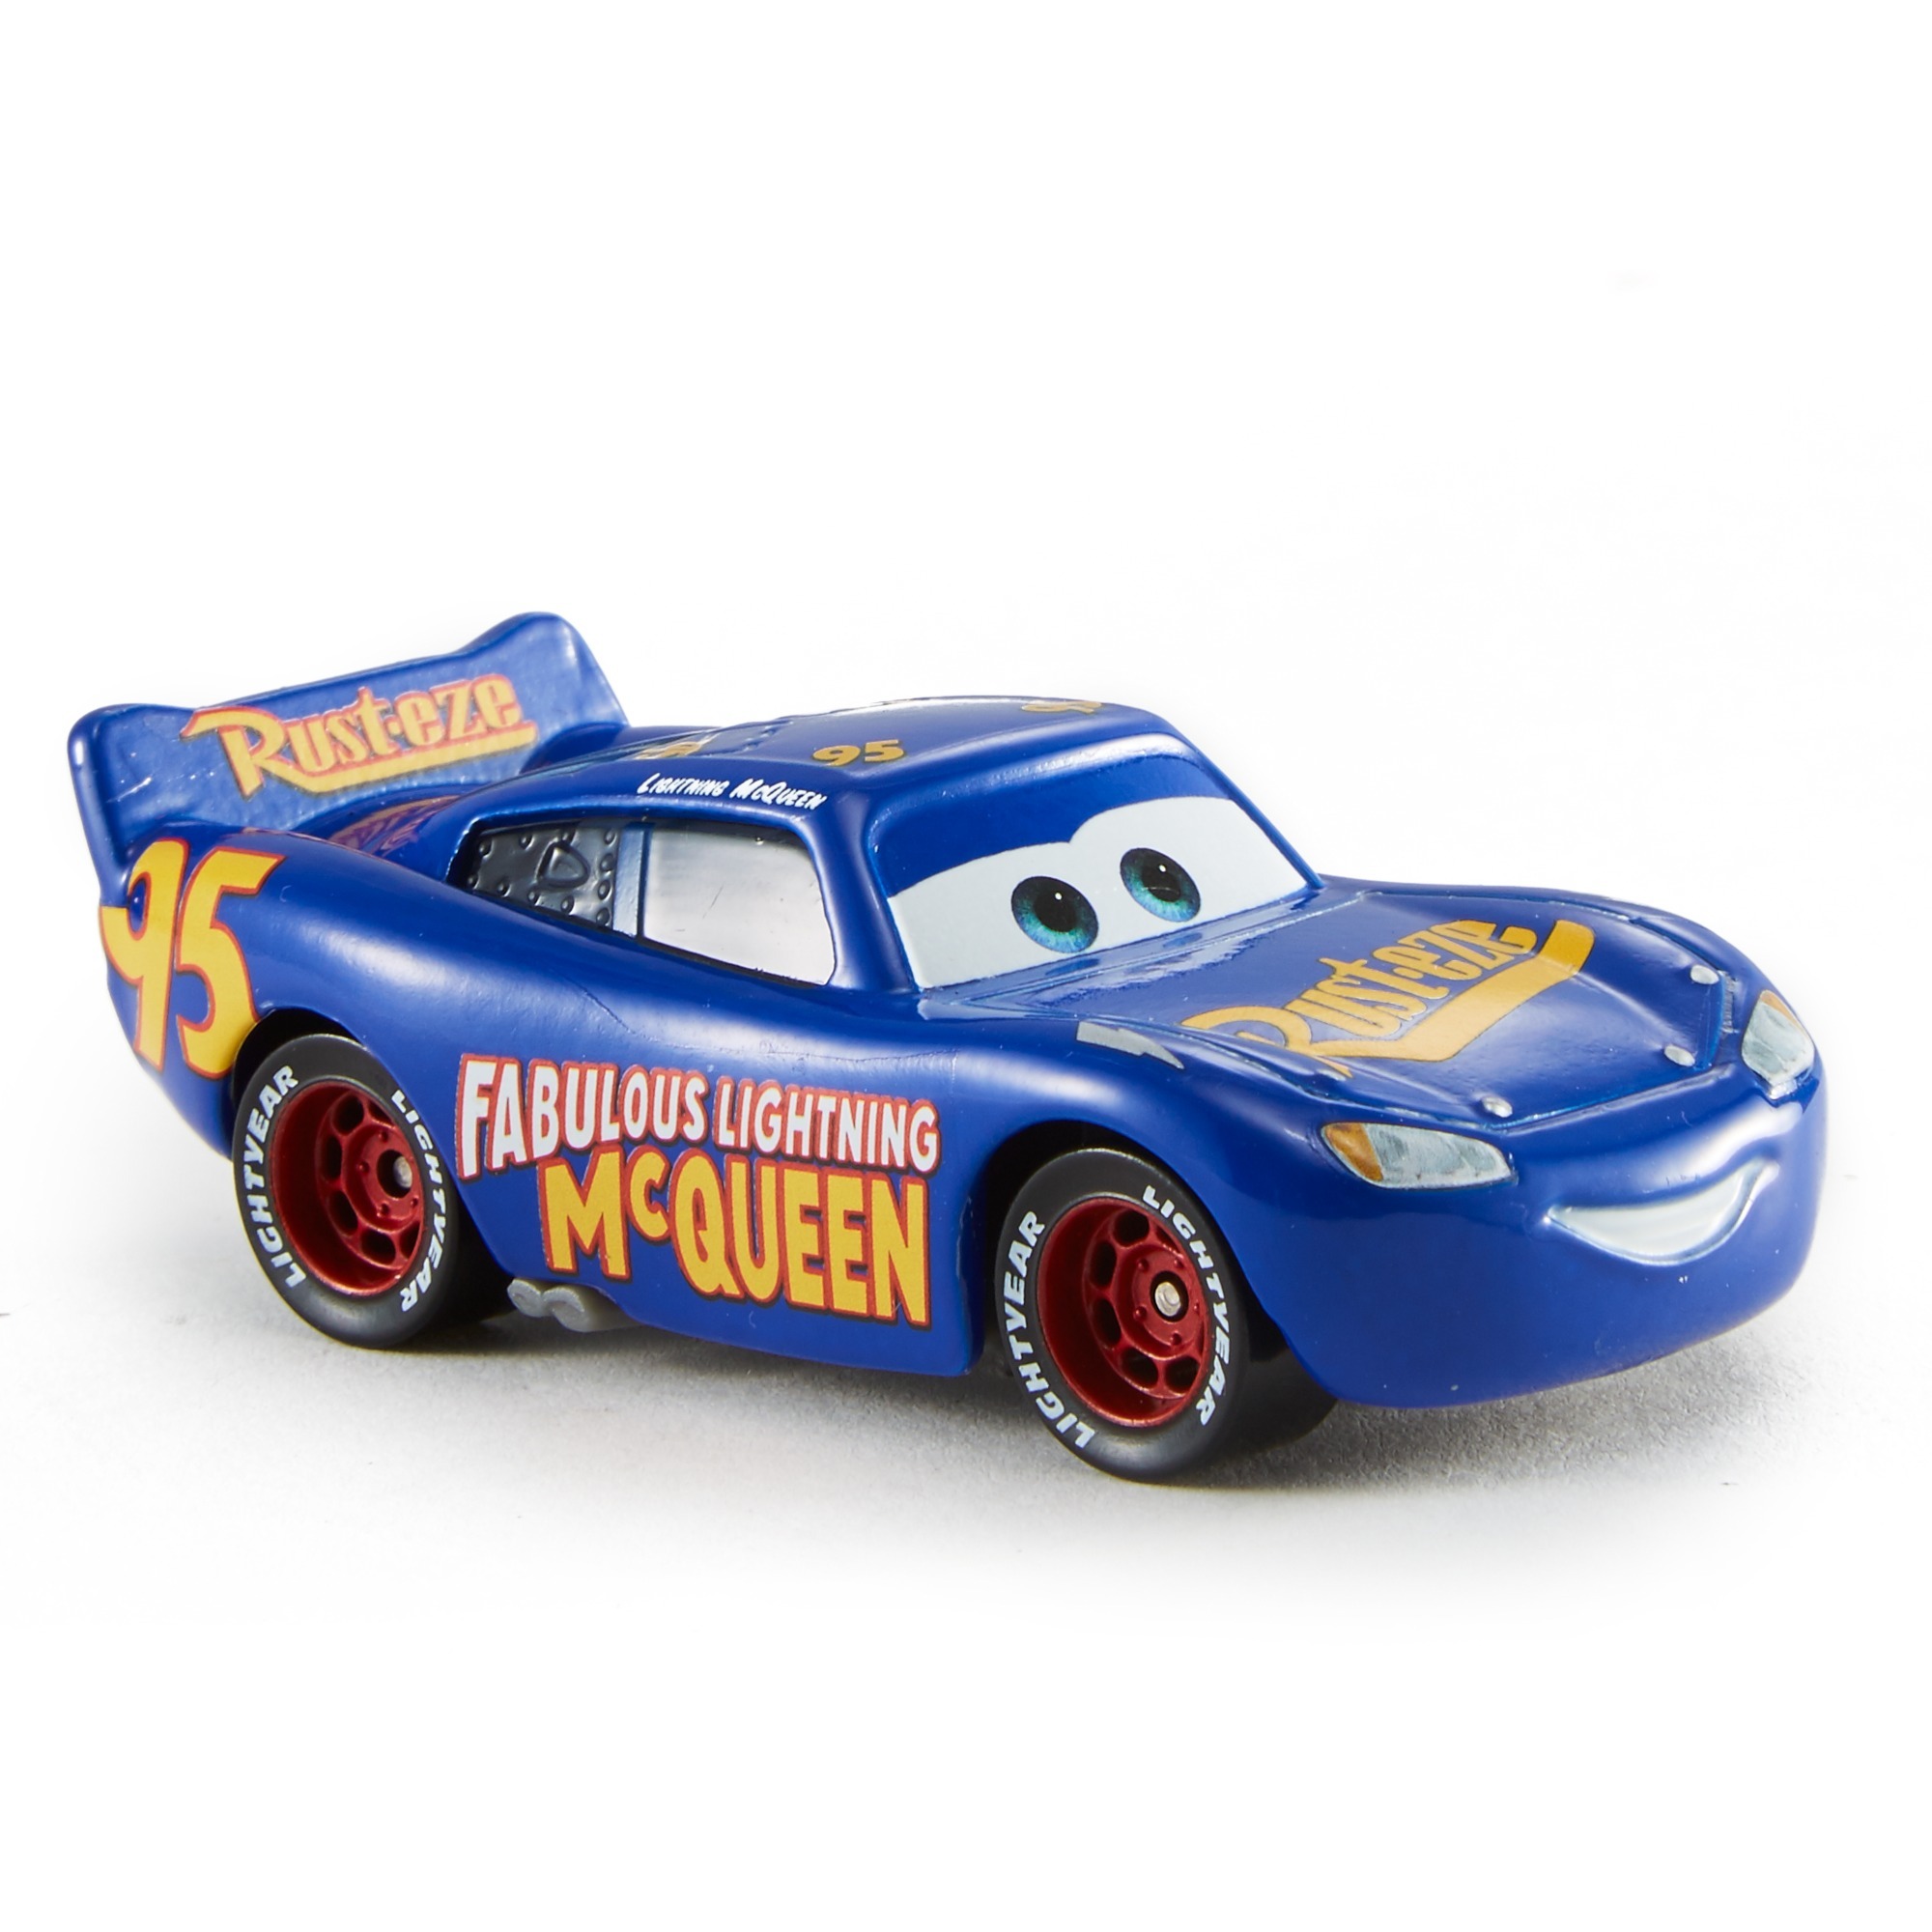 Disney Cars 3 Fabulous Lightning McQueen, Toy vehicle